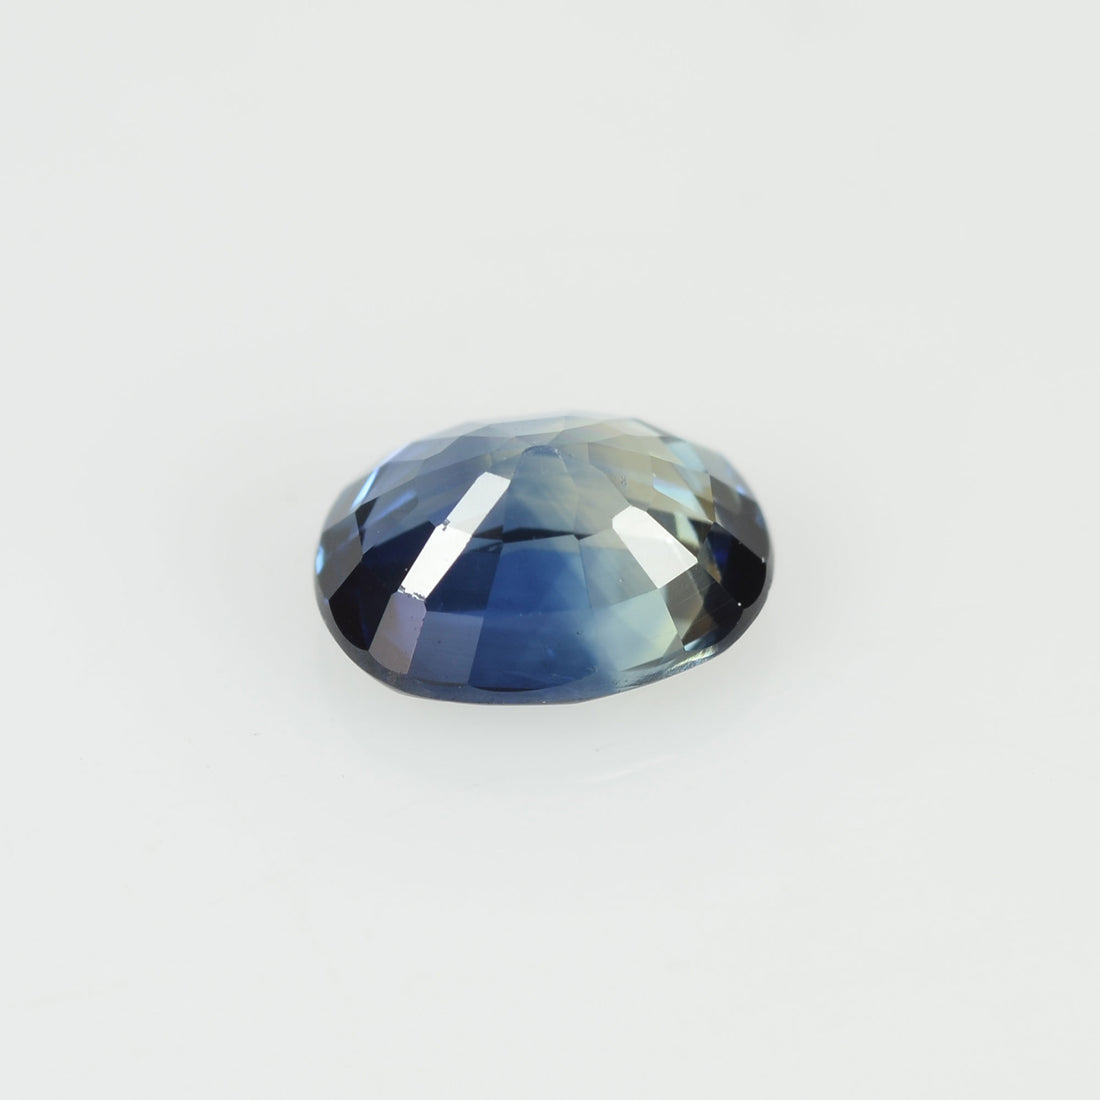 0.52 cts Natural Blue Sapphire Loose Gemstone Oval Cut - Thai Gems Export Ltd.